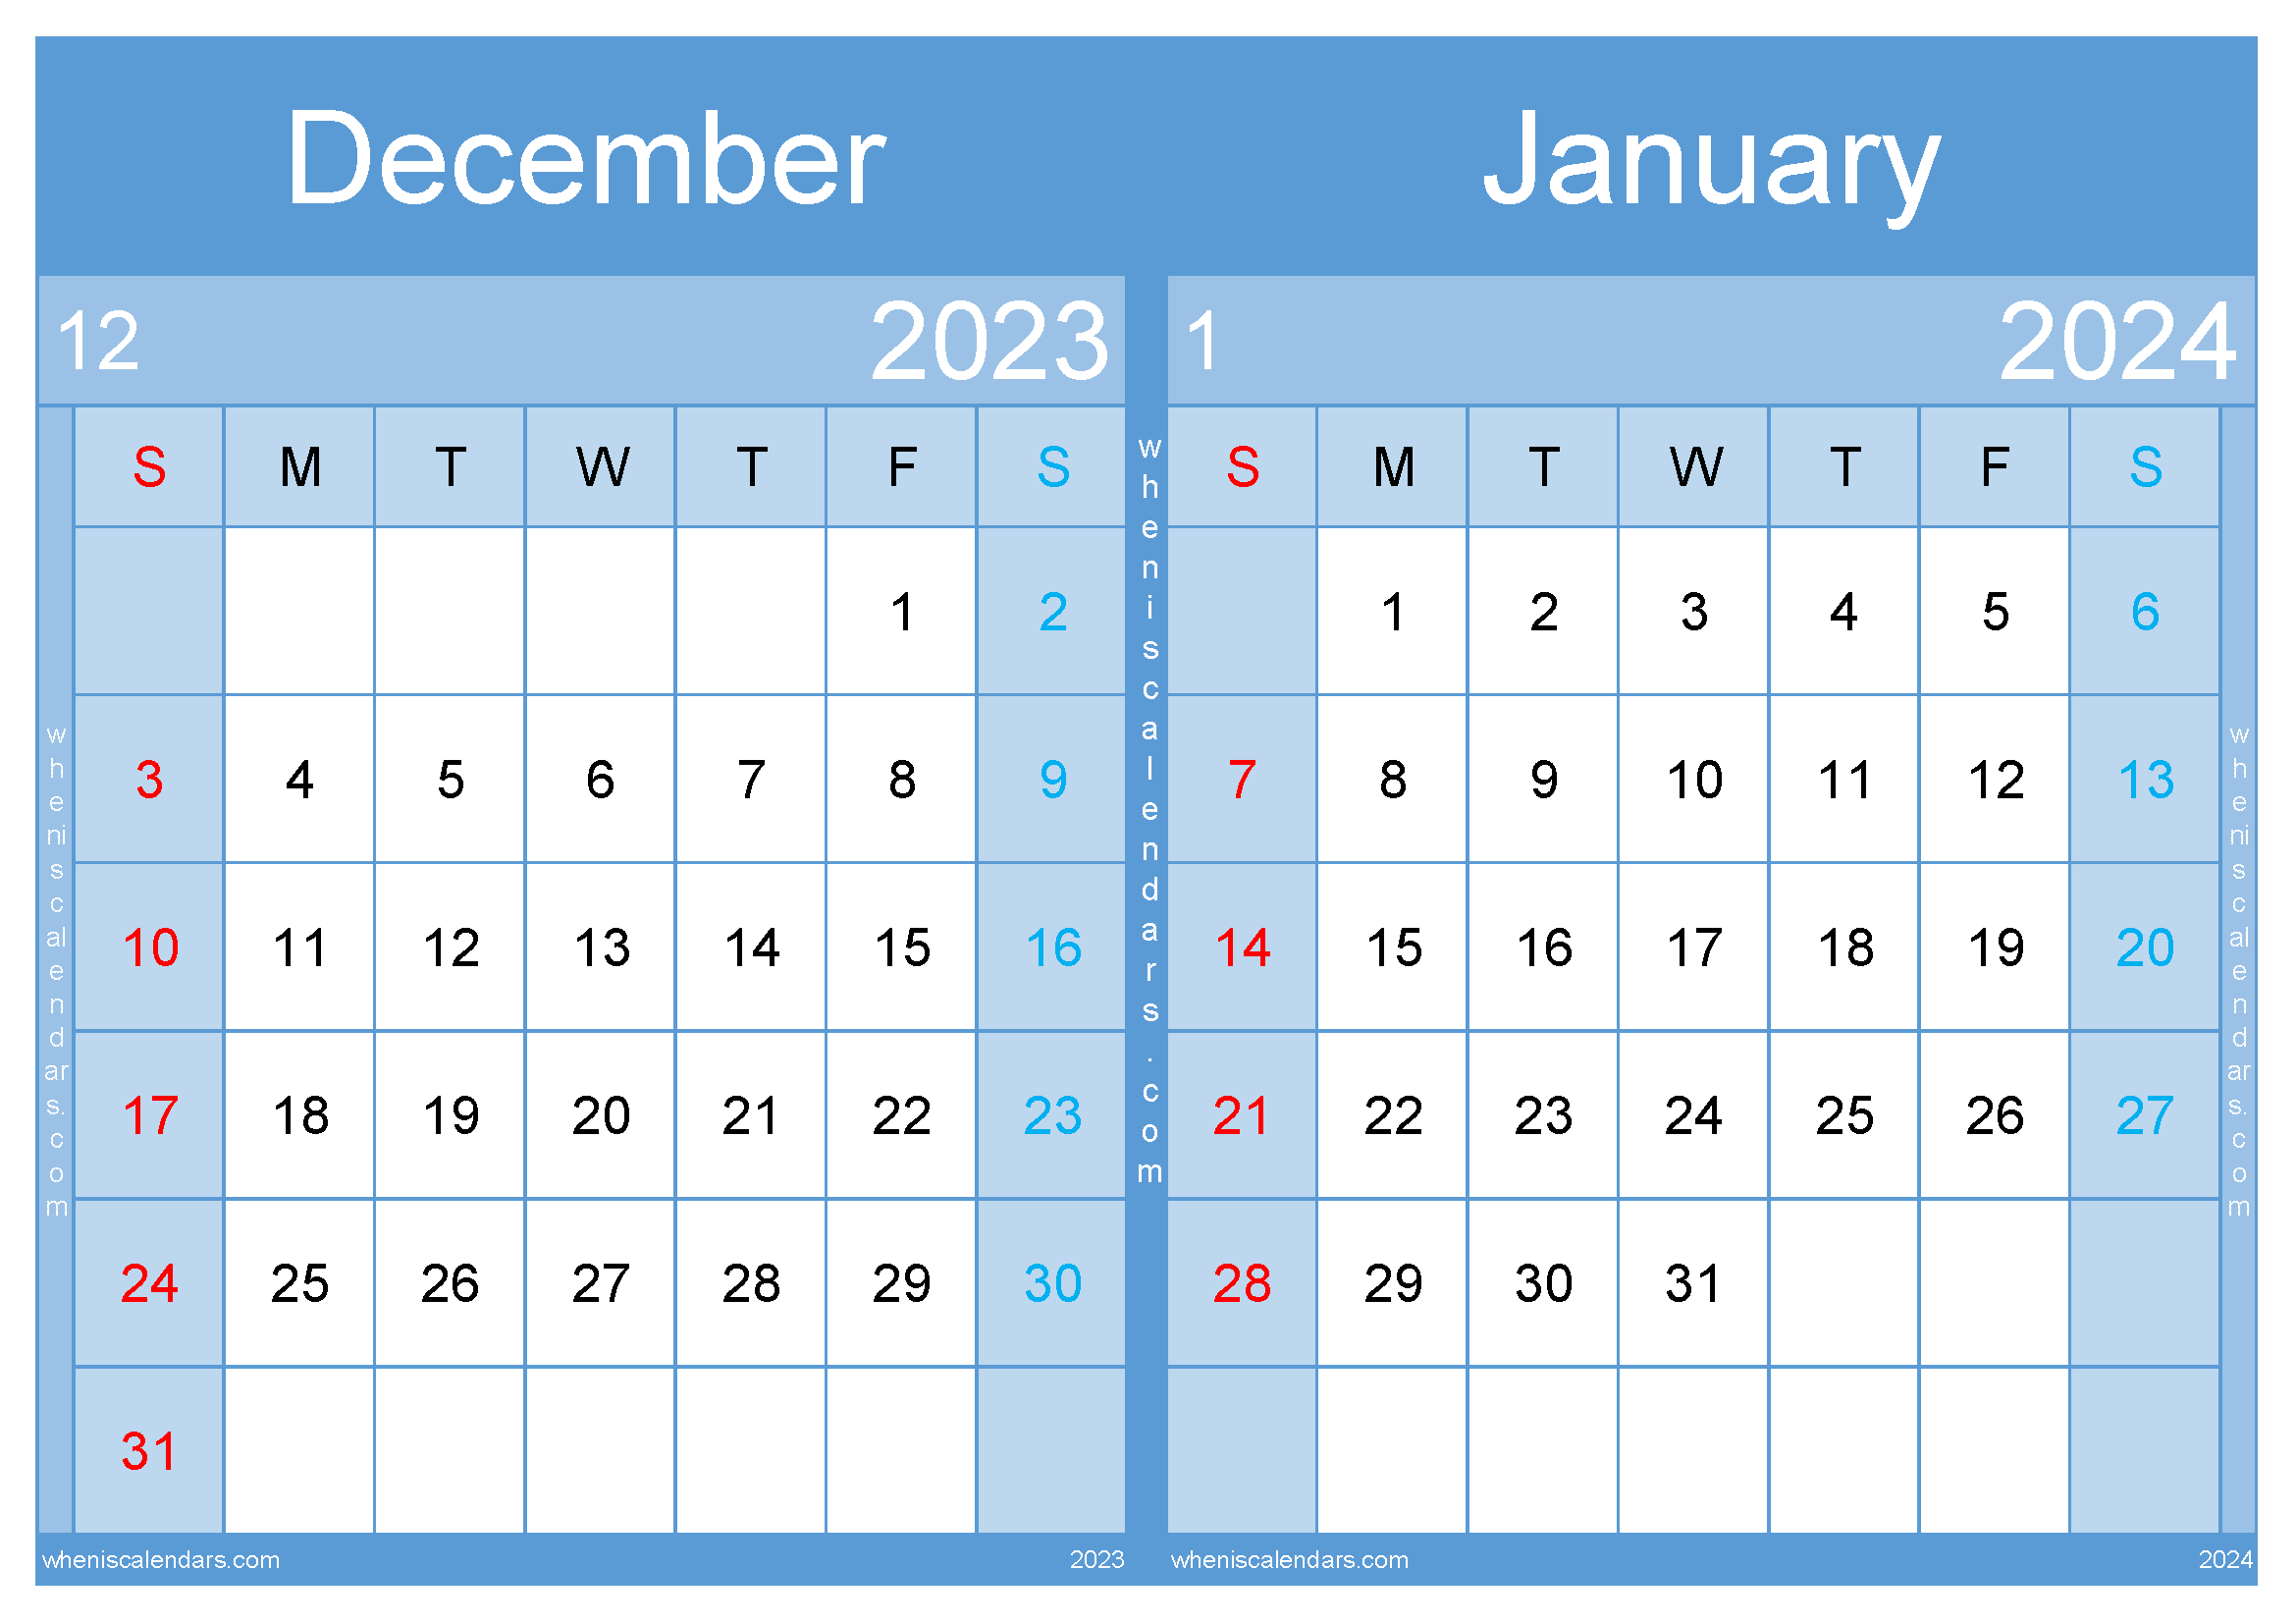 Dec 2023 January 2024 calendar printable DJ232007